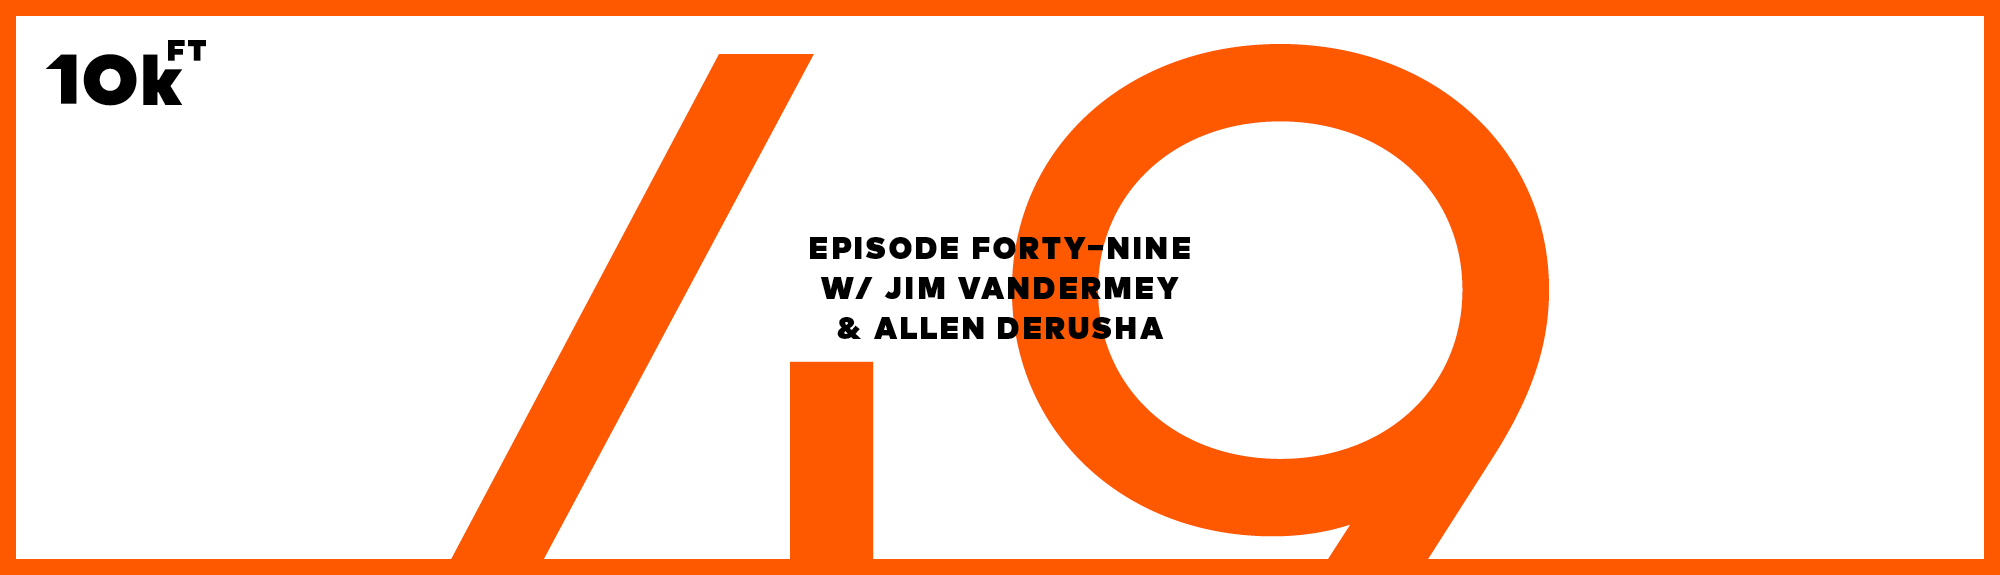 Ten Thousand Feet Podcast Episode 49: Automation Infrastructure with Jim VanderMey and Allen Derusha - Part 2